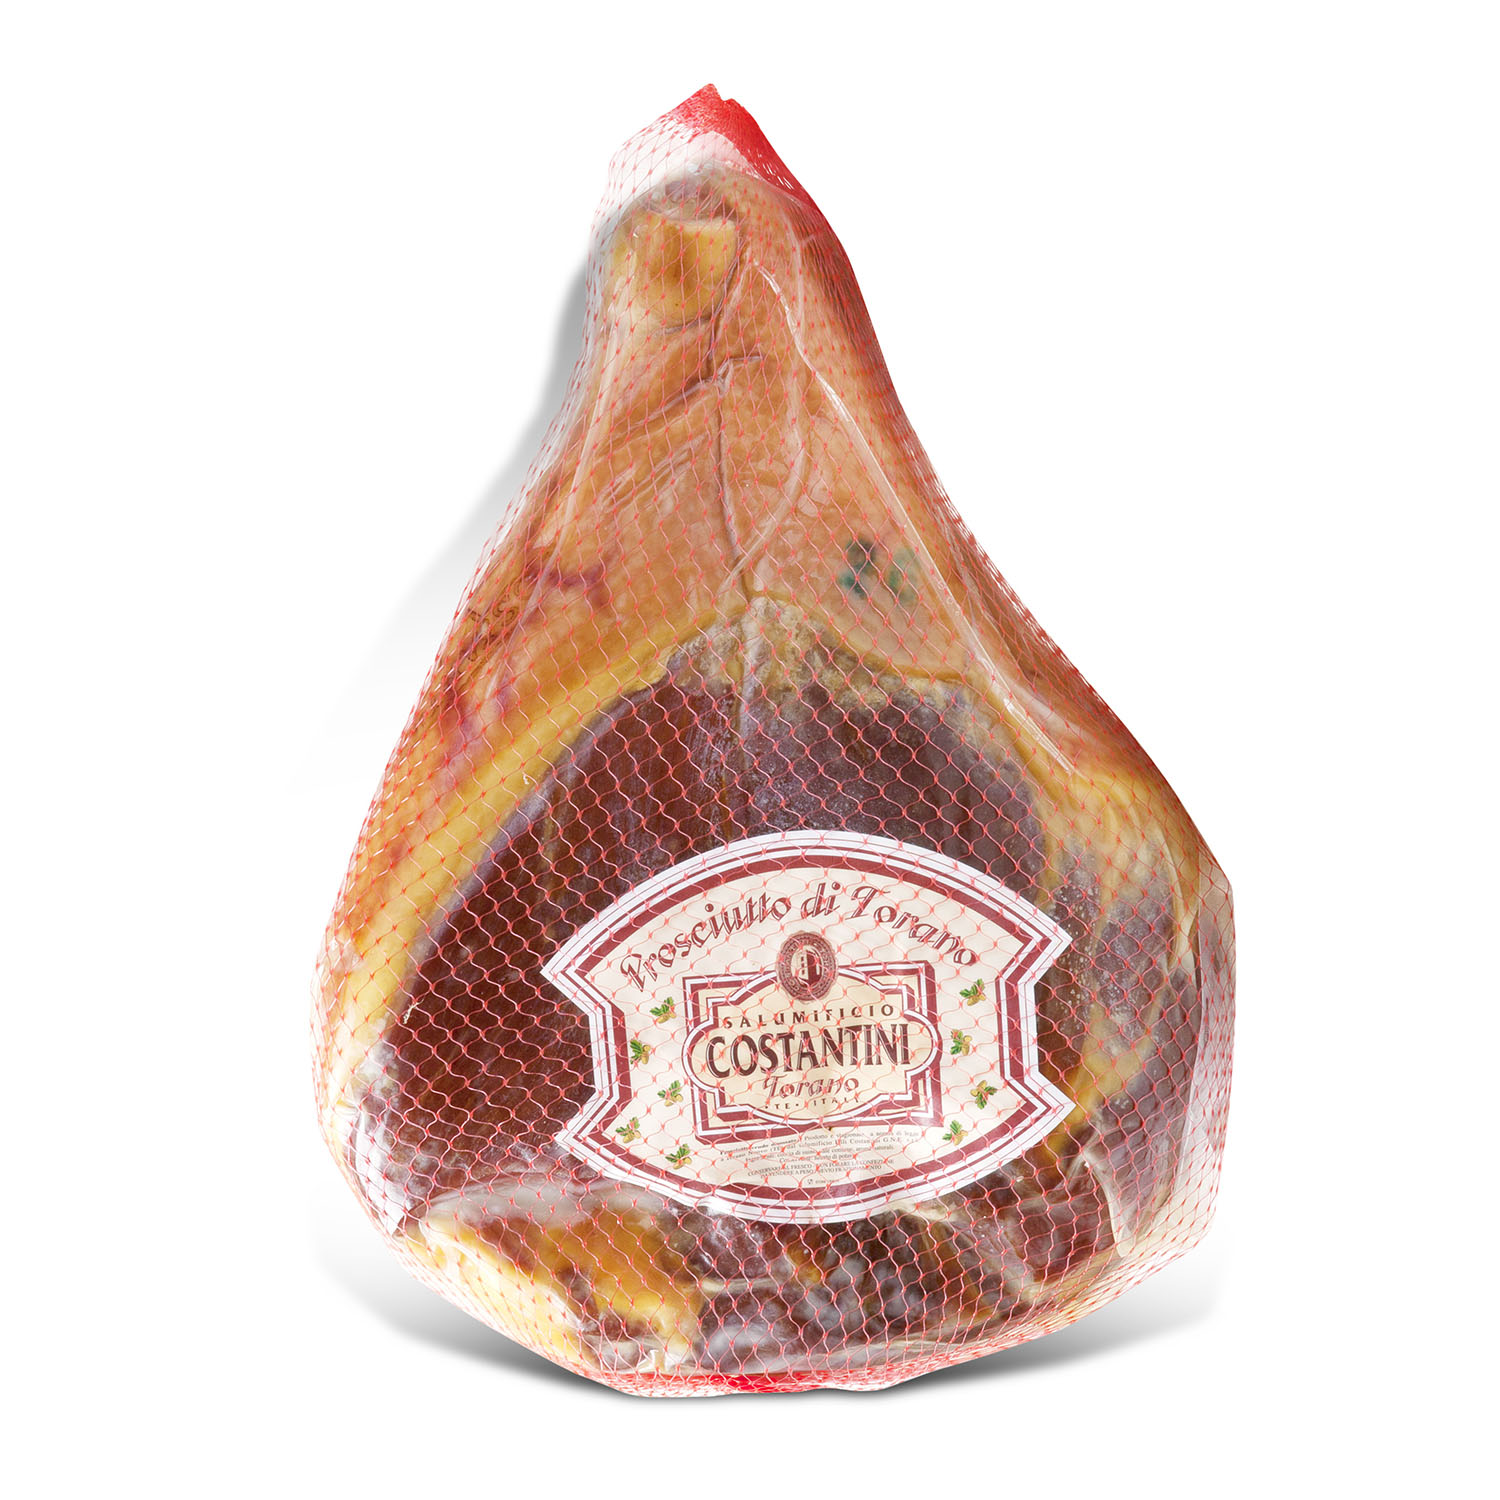 “Gran Riserva” Boneless Ham